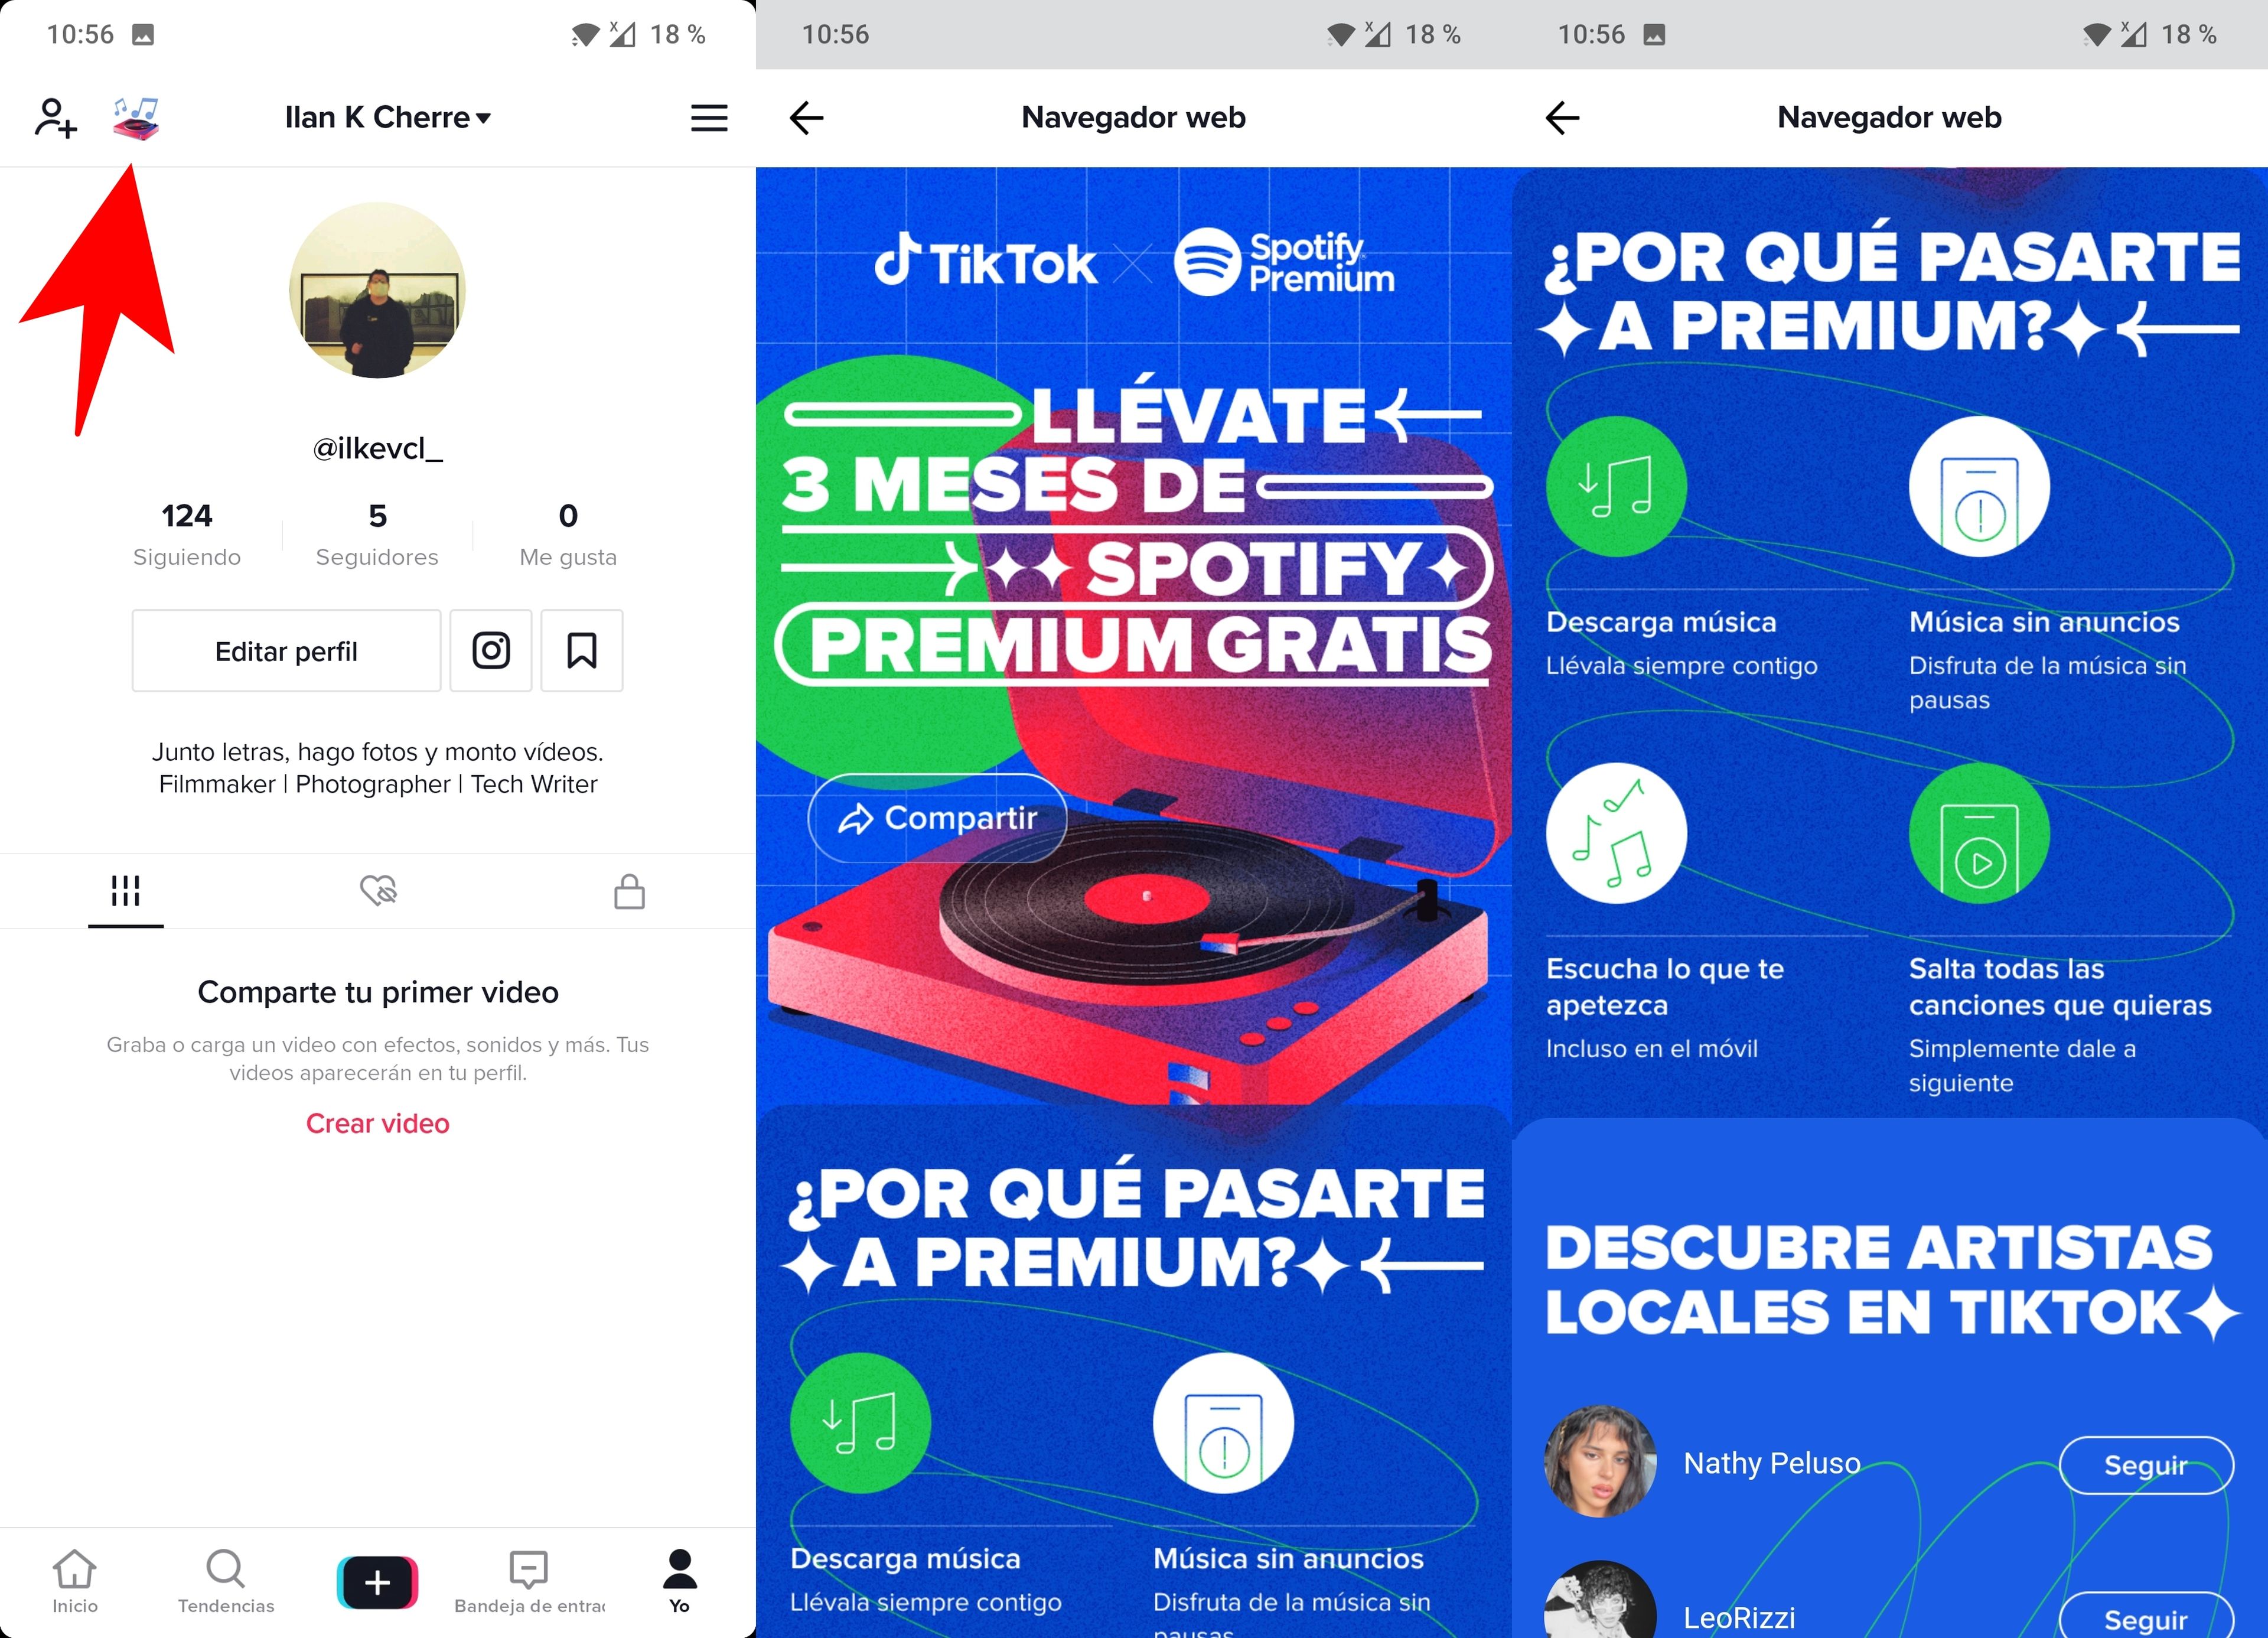 Si usas TikTok tienes tres meses de Spotify Premium gratis